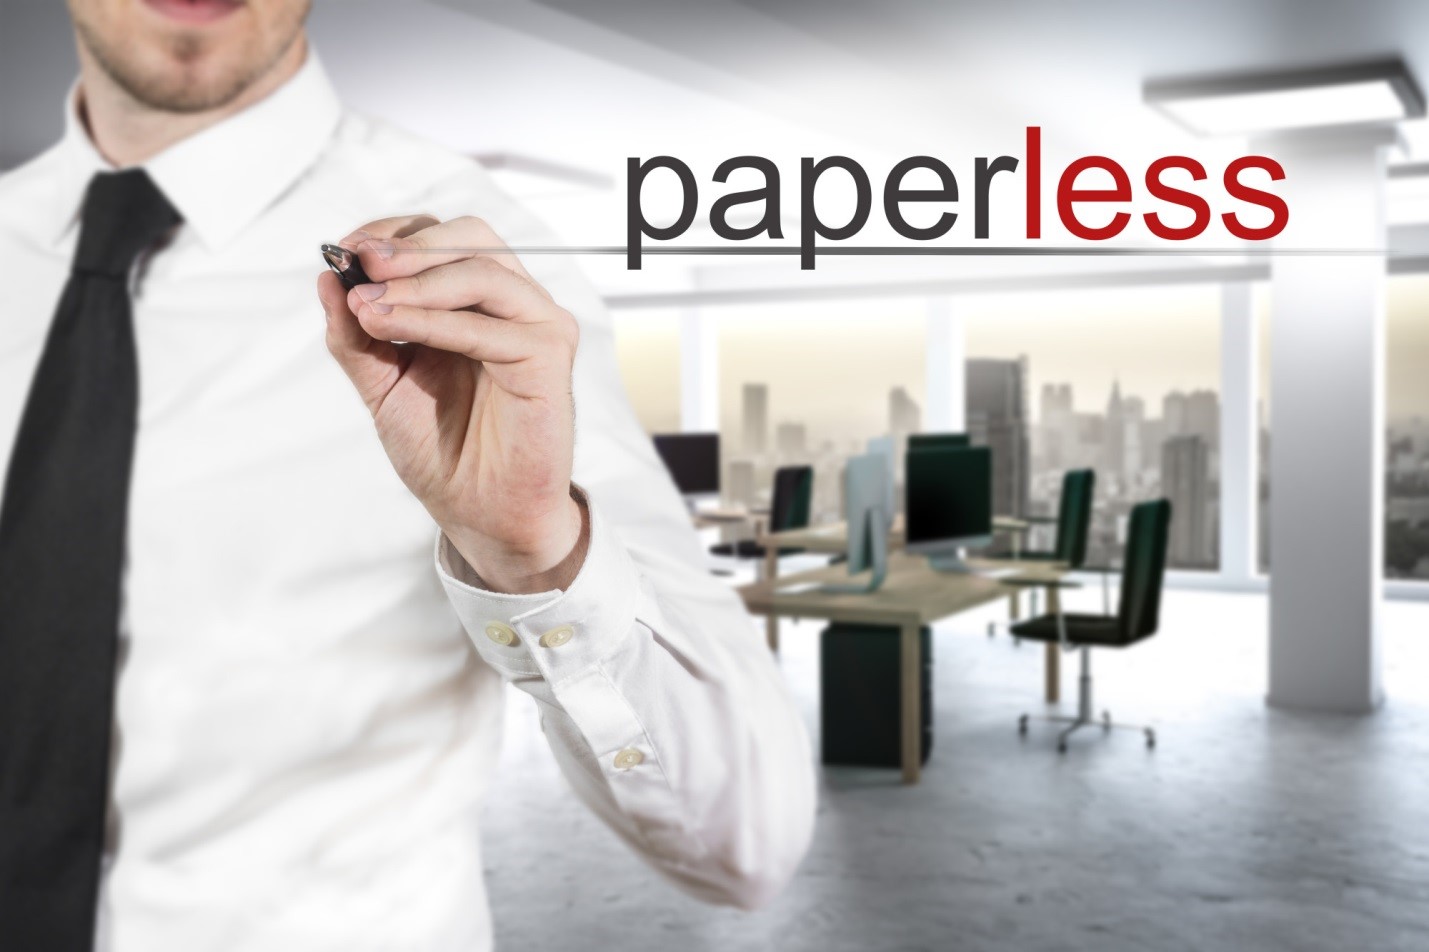 going paperless